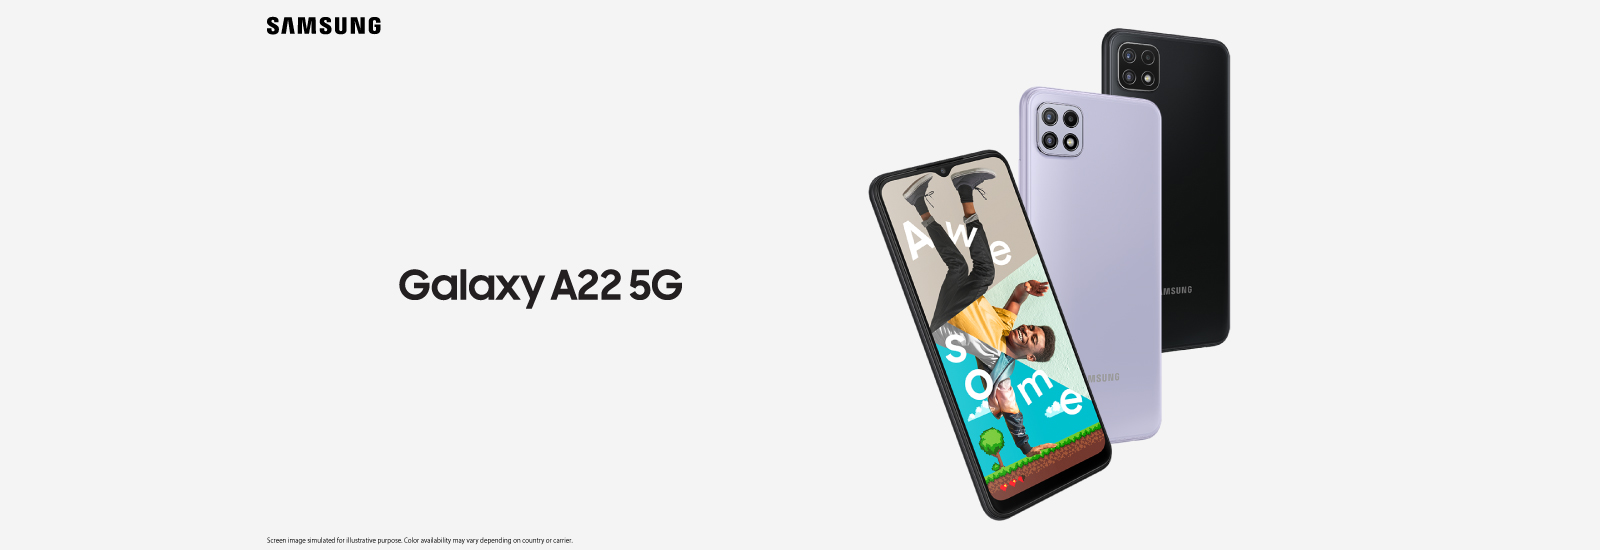 Samsung Galaxy A22 5G - $0 Handset price. Monthly fee $198 to enjoy Samsung Galaxy A22 5G (Suggested Retail Price $1,998)